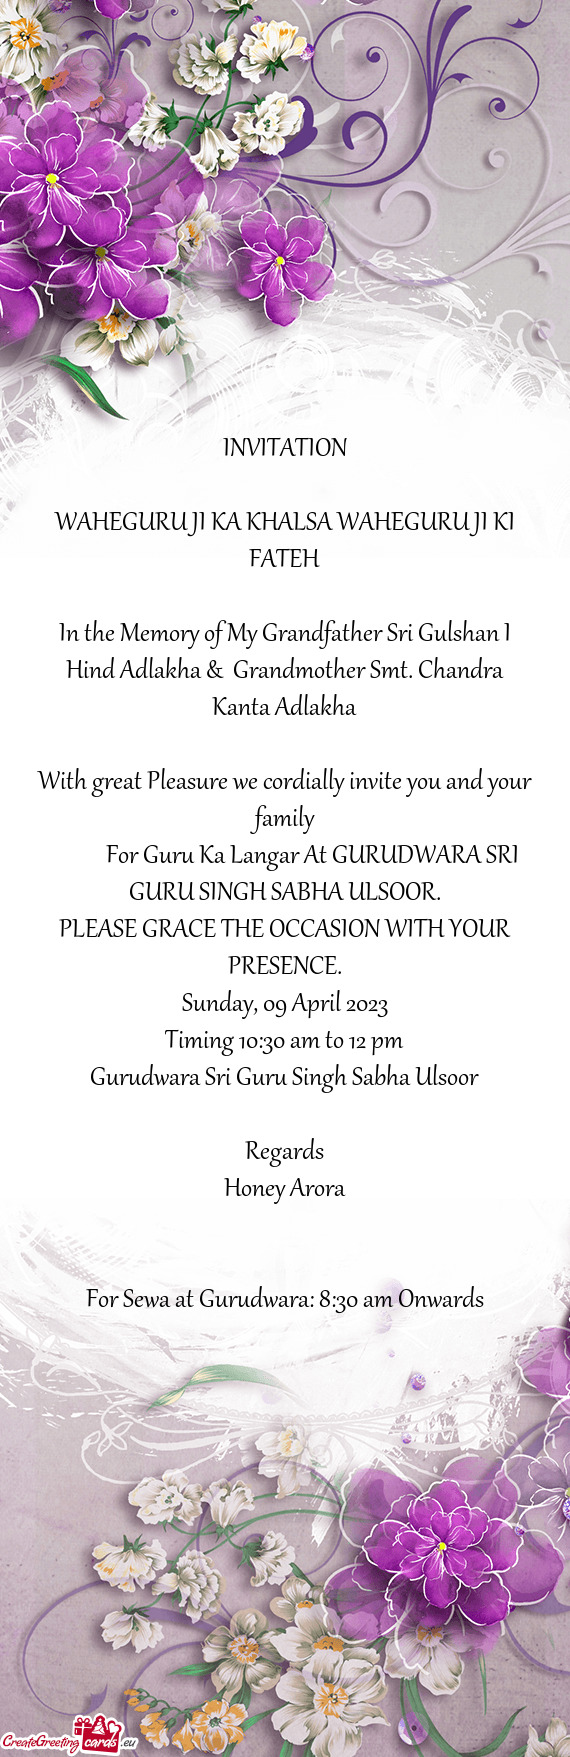 In the Memory of My Grandfather Sri Gulshan I Hind Adlakha & Grandmother Smt. Chandra Kanta Adlakha